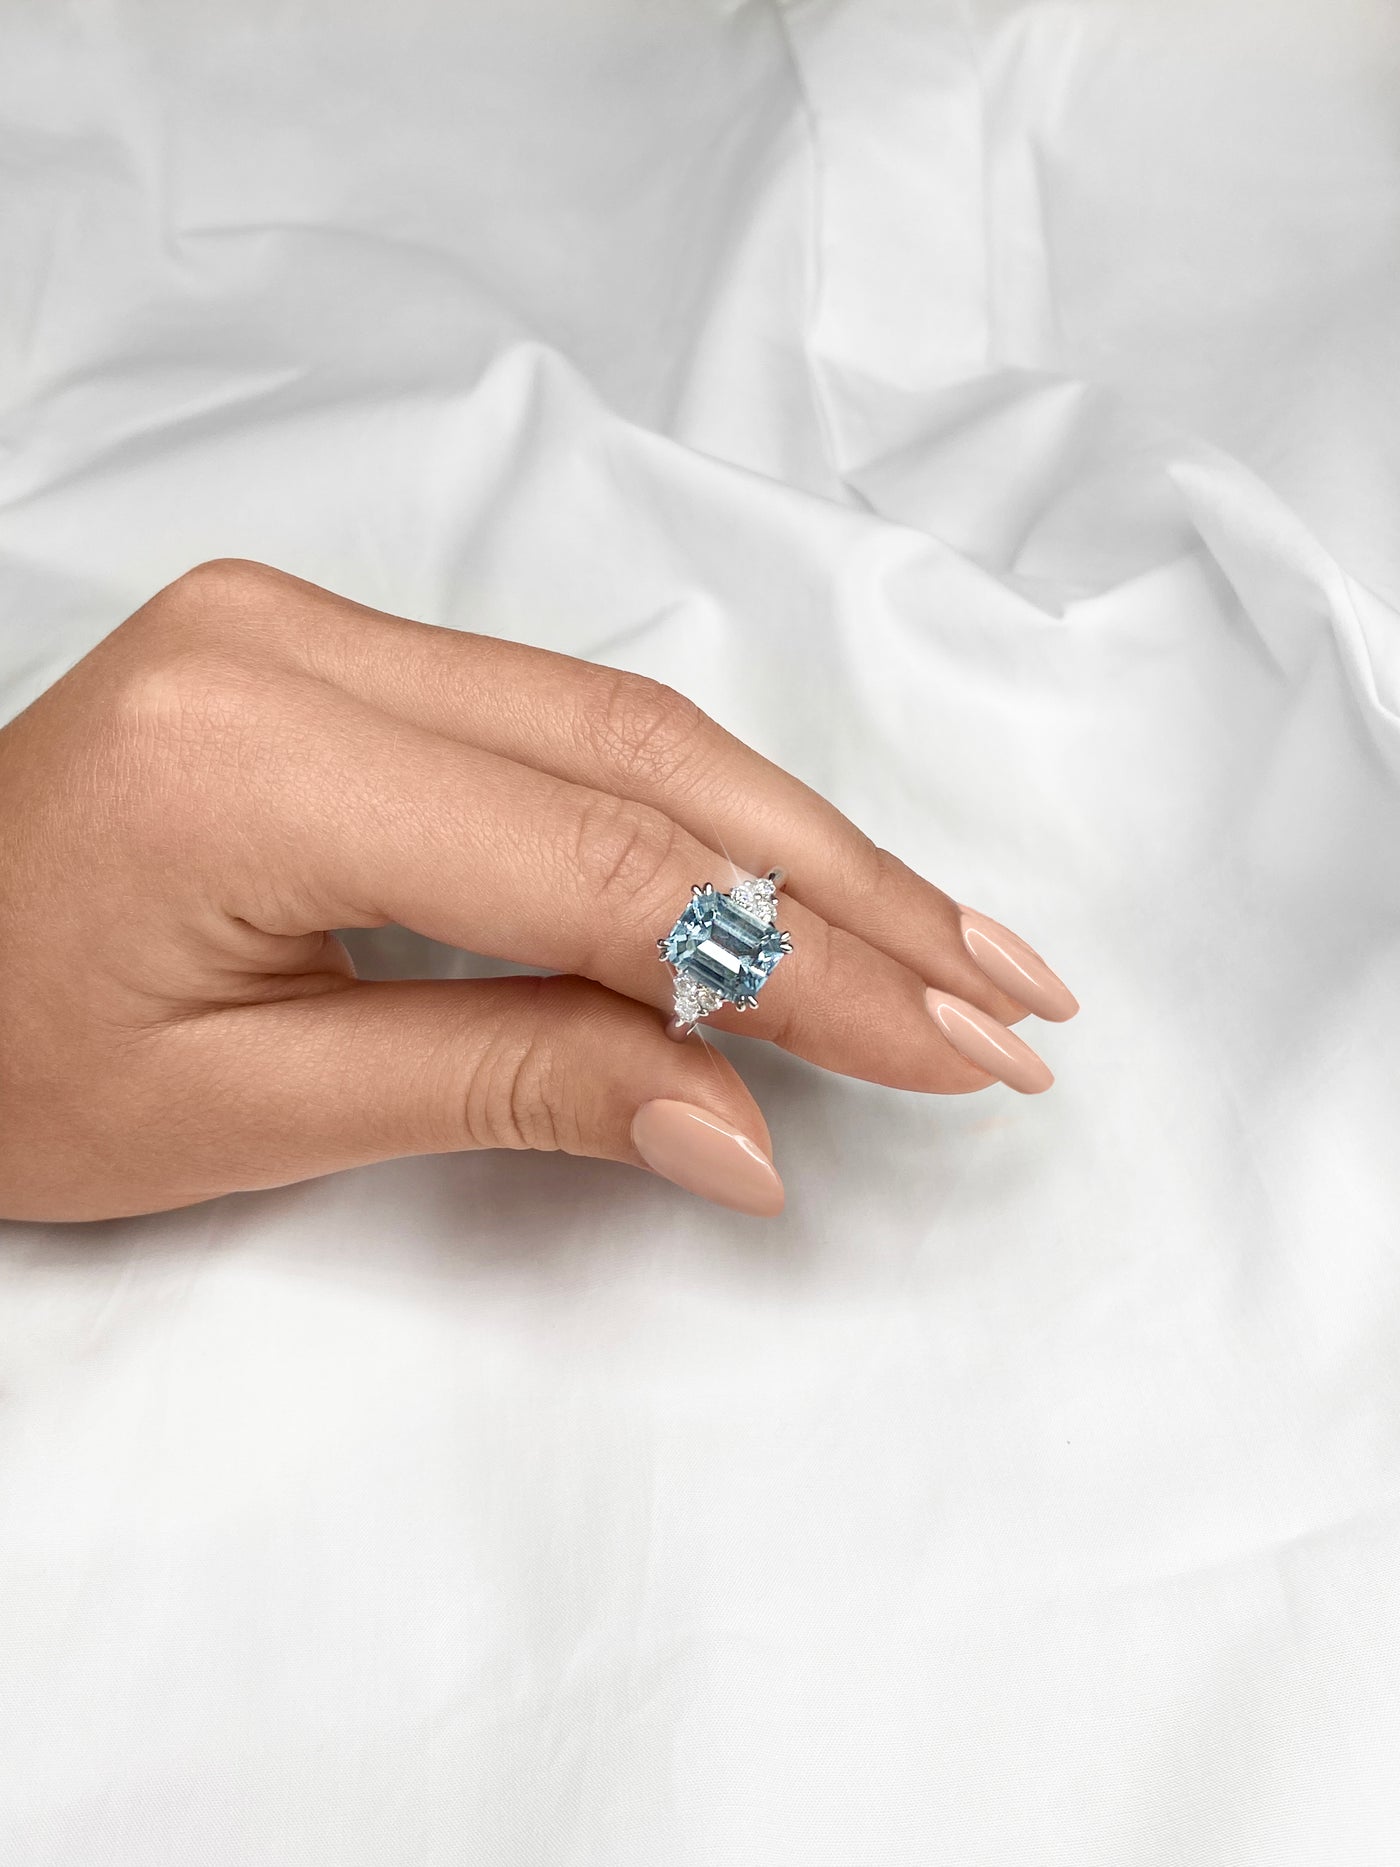 18ct WG 3.10ct Emerald cut aquamarine ring on finger